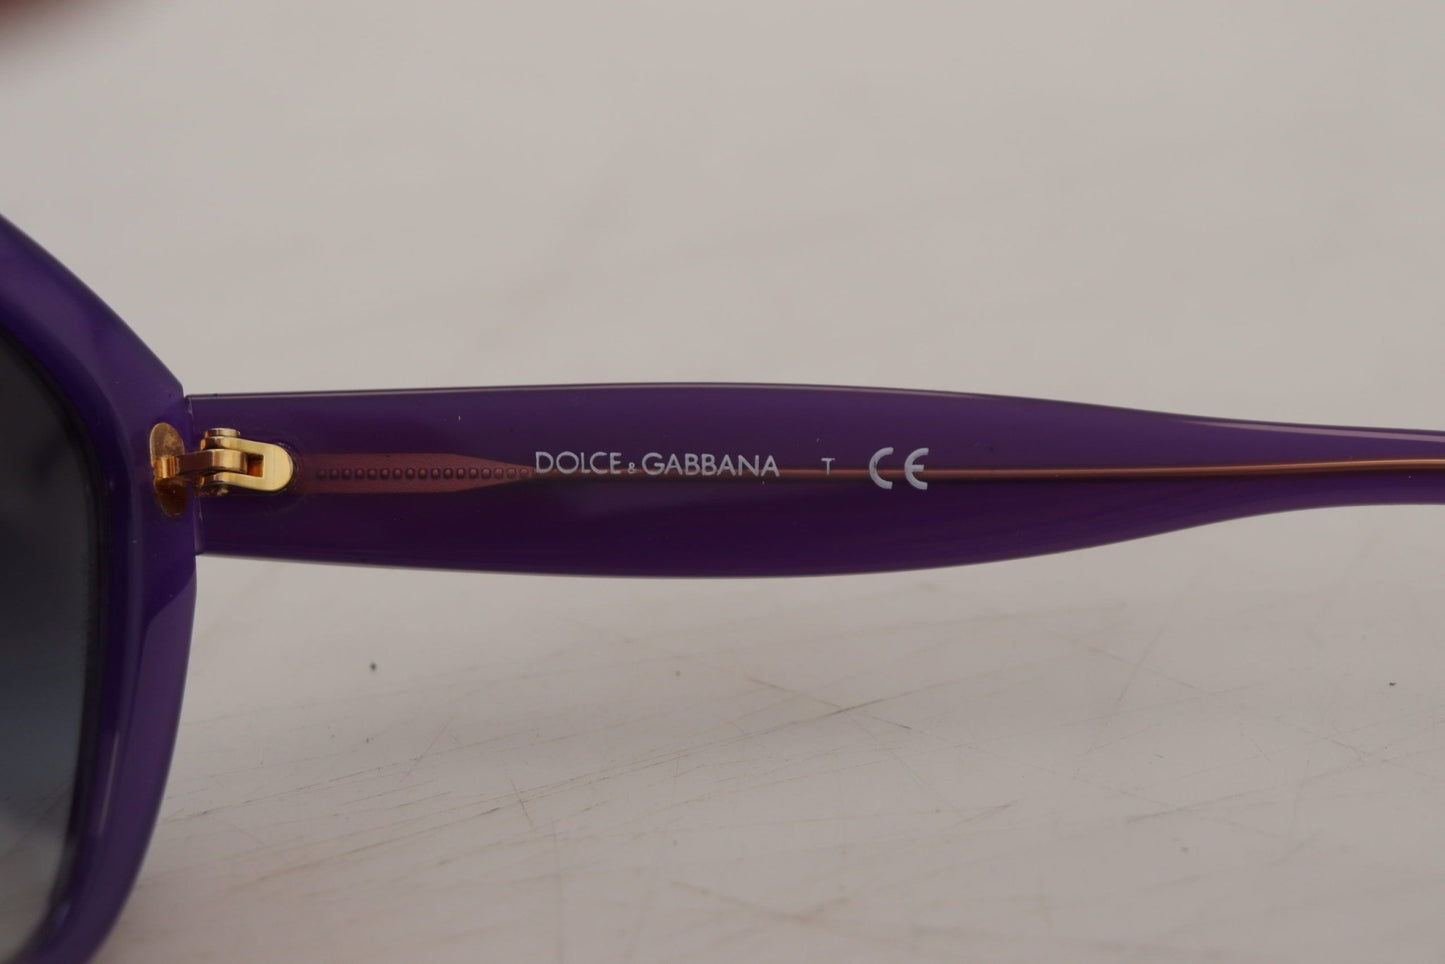 Dolce & Gabbana Chic Purple Cat-Eye Designer Sunglasses